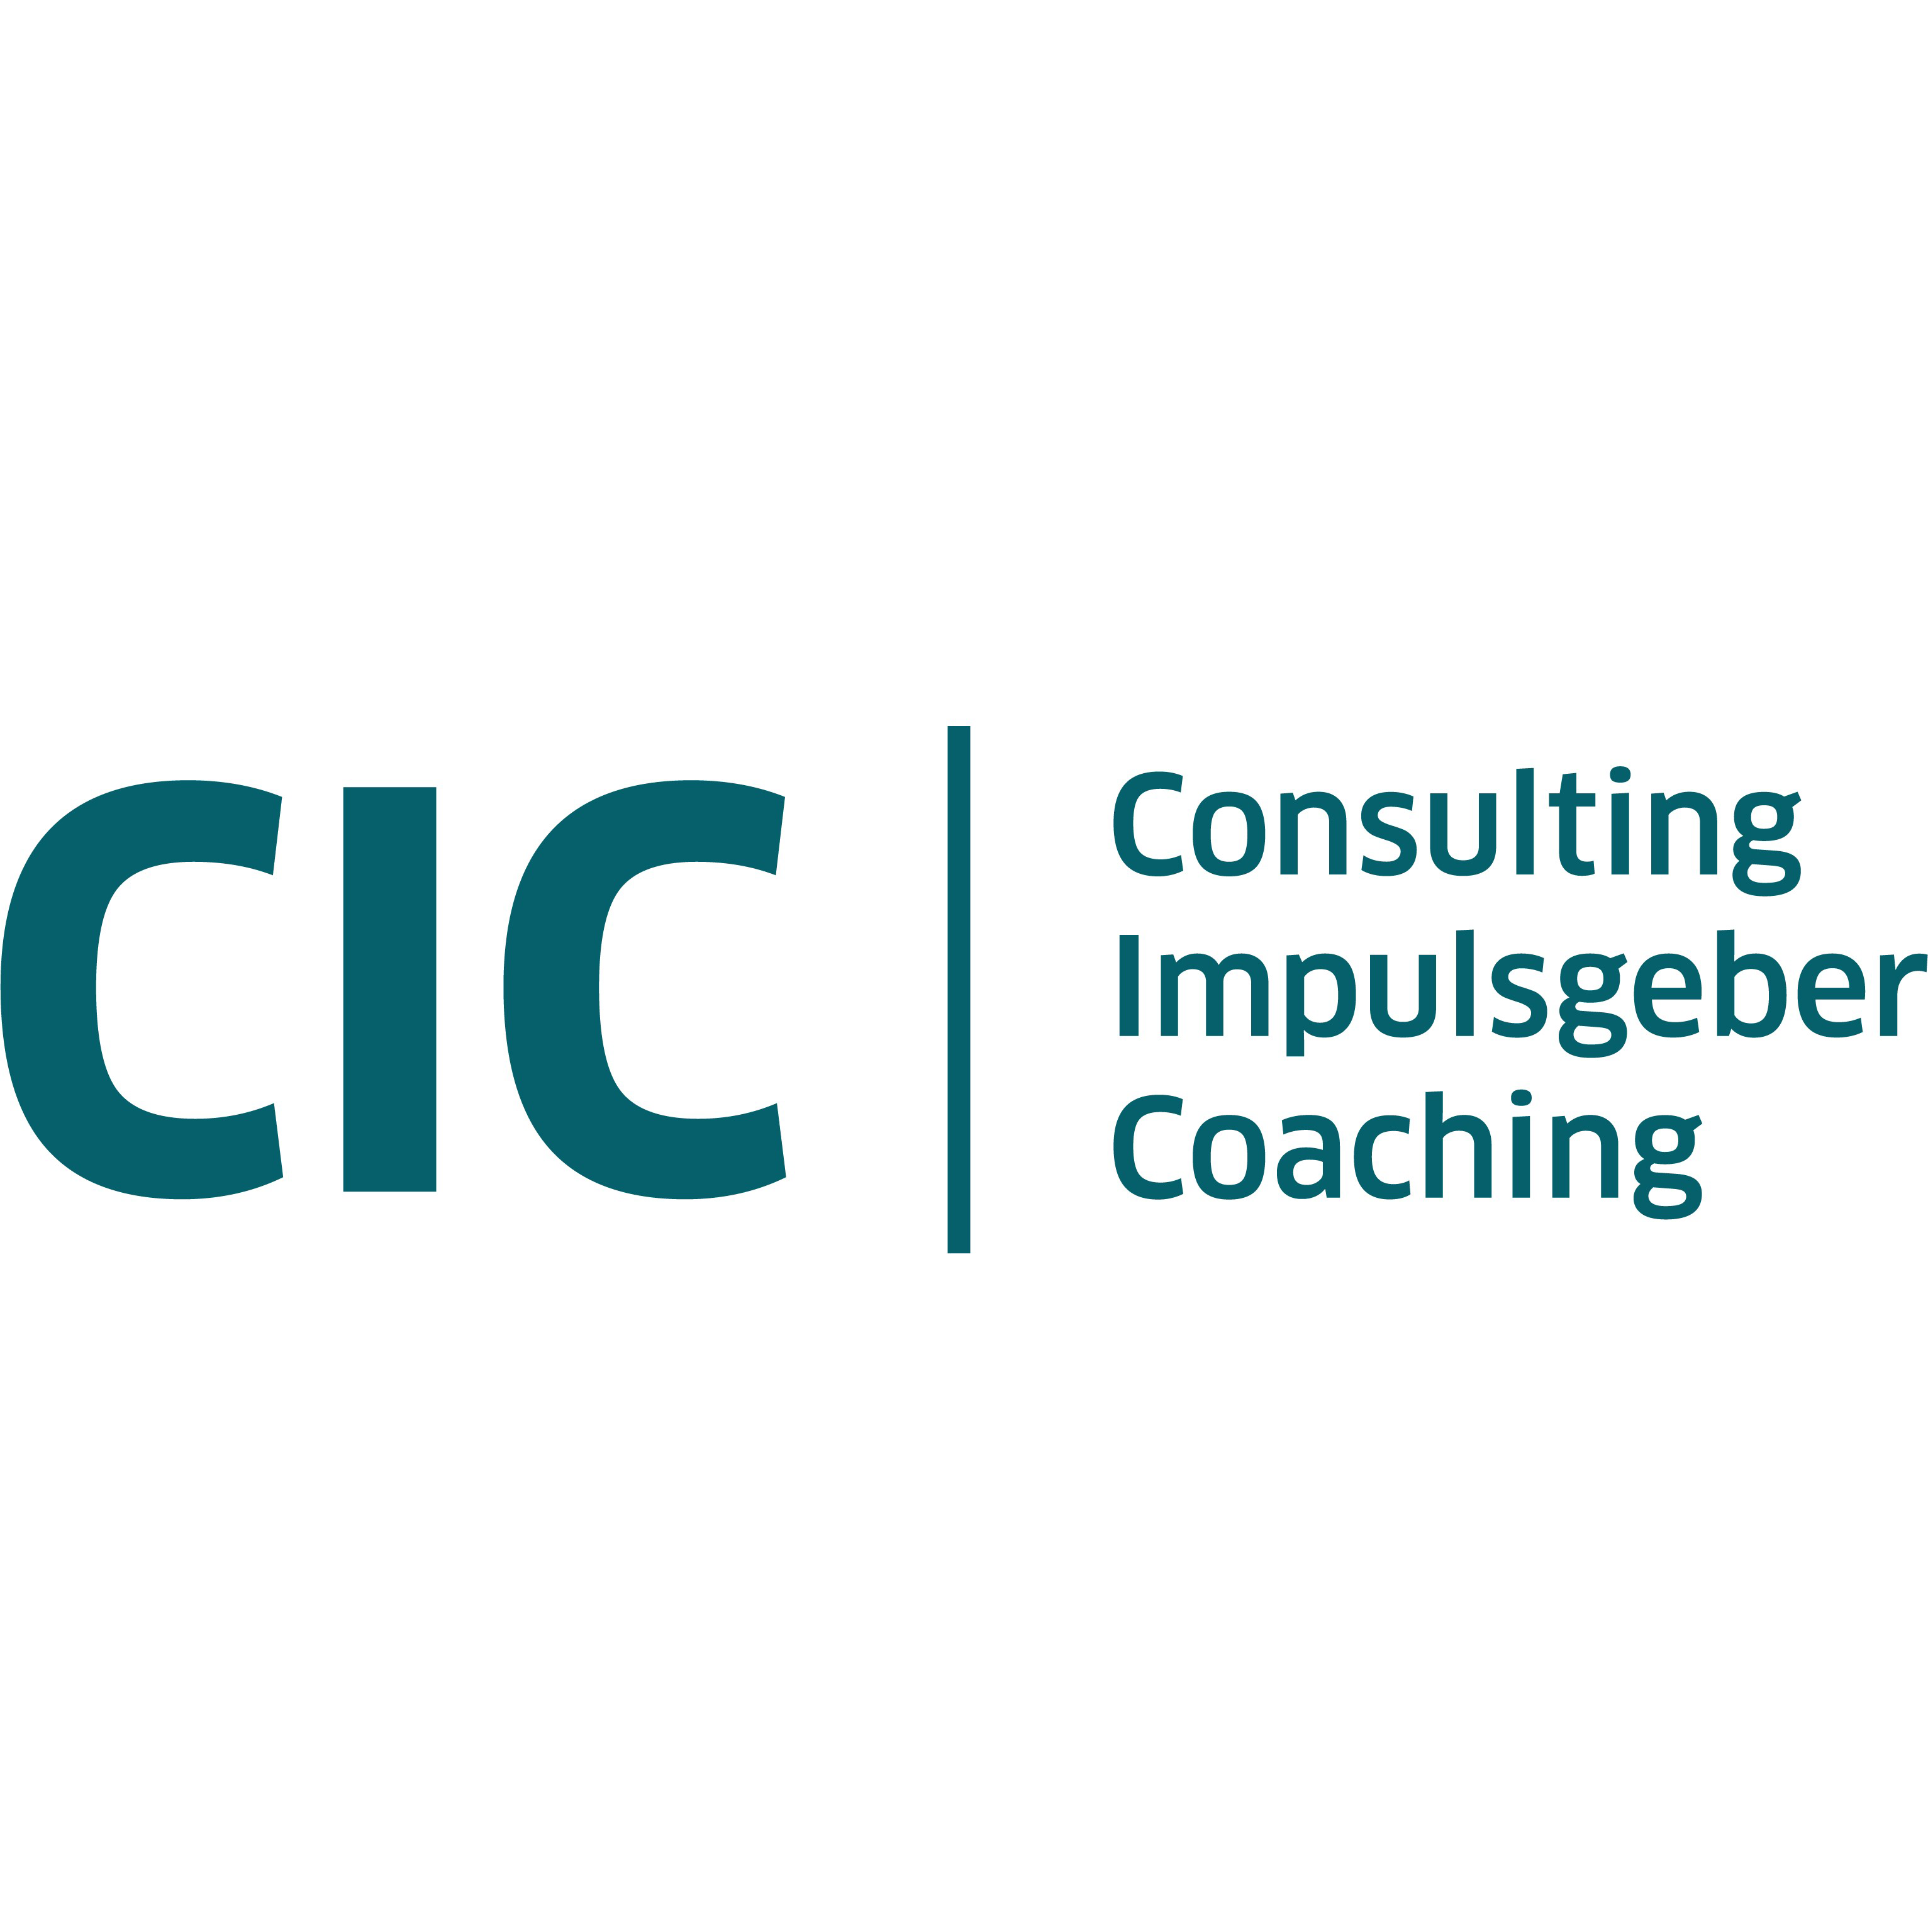 cic-impulsegber-logo-2022